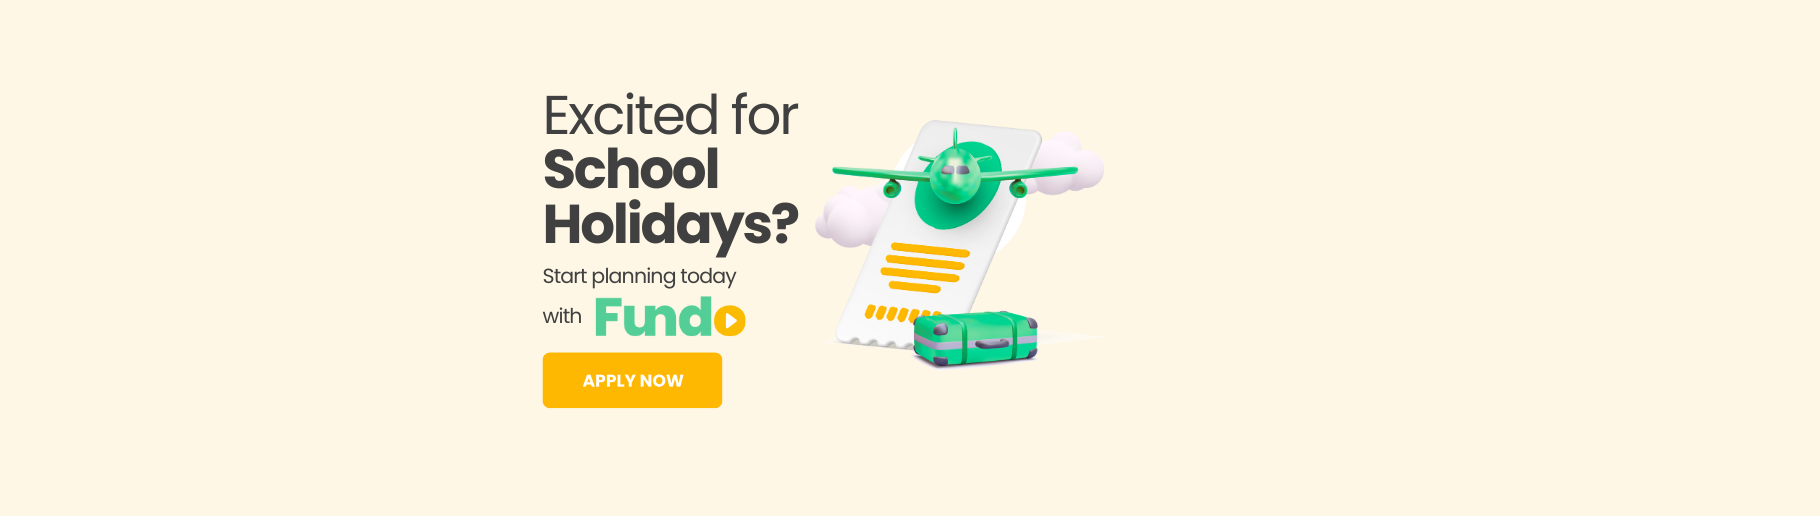 Fun School Holidays with Fundo’s Quick Cash Loan